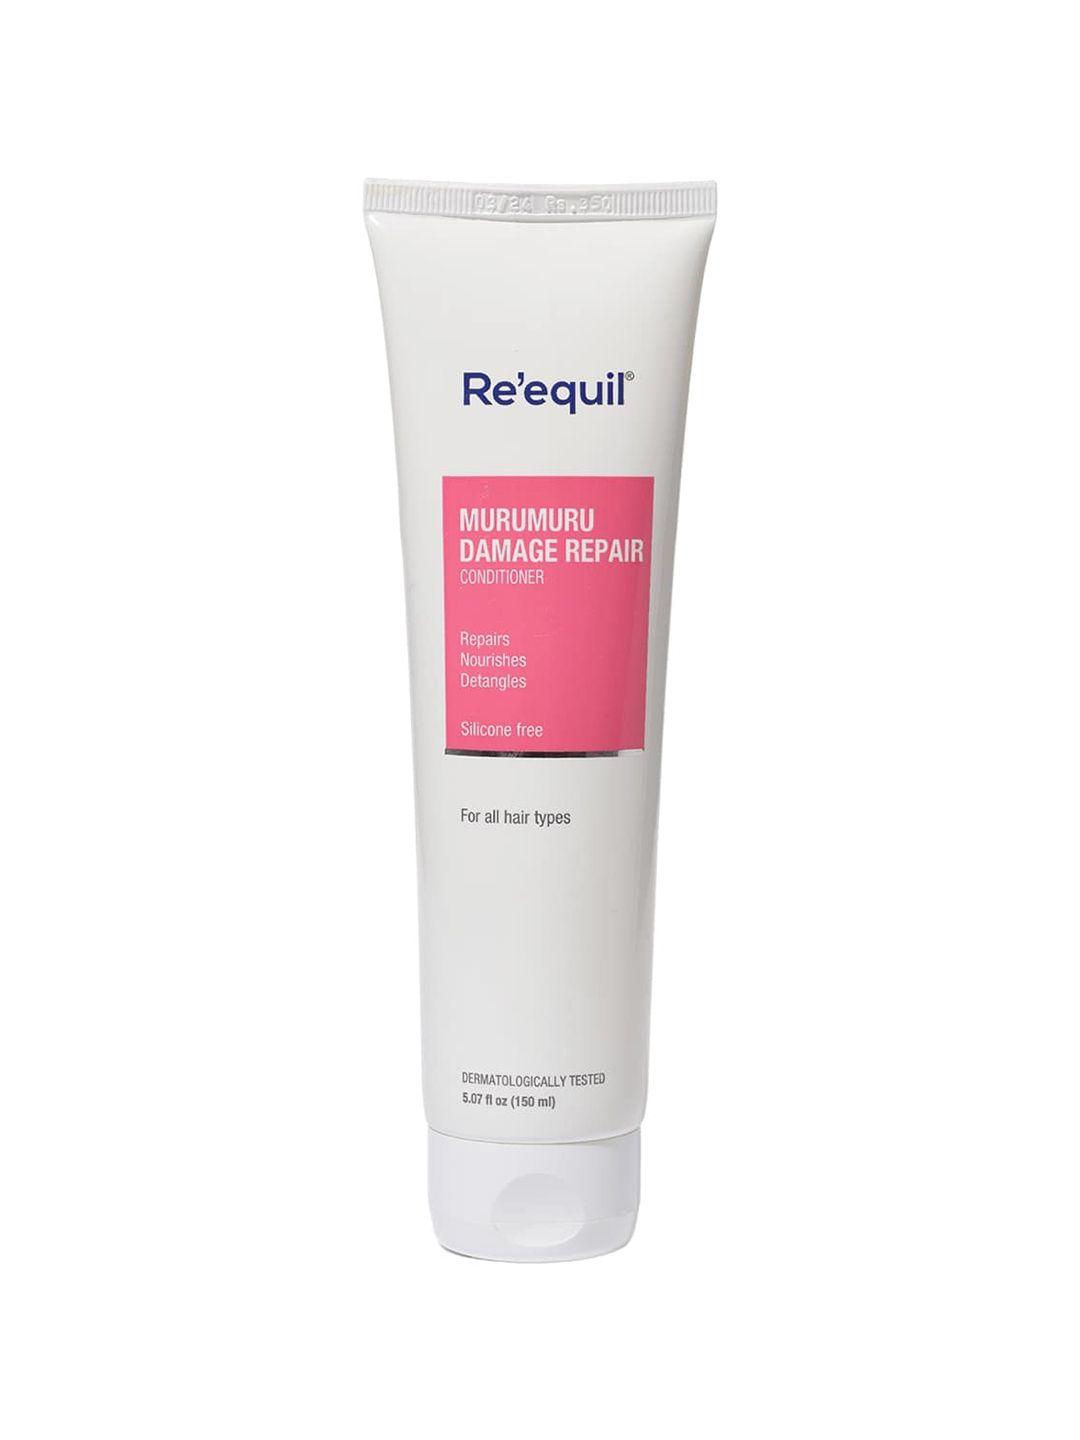 reequil murumuru damage repair hair conditioner with aspartic acid